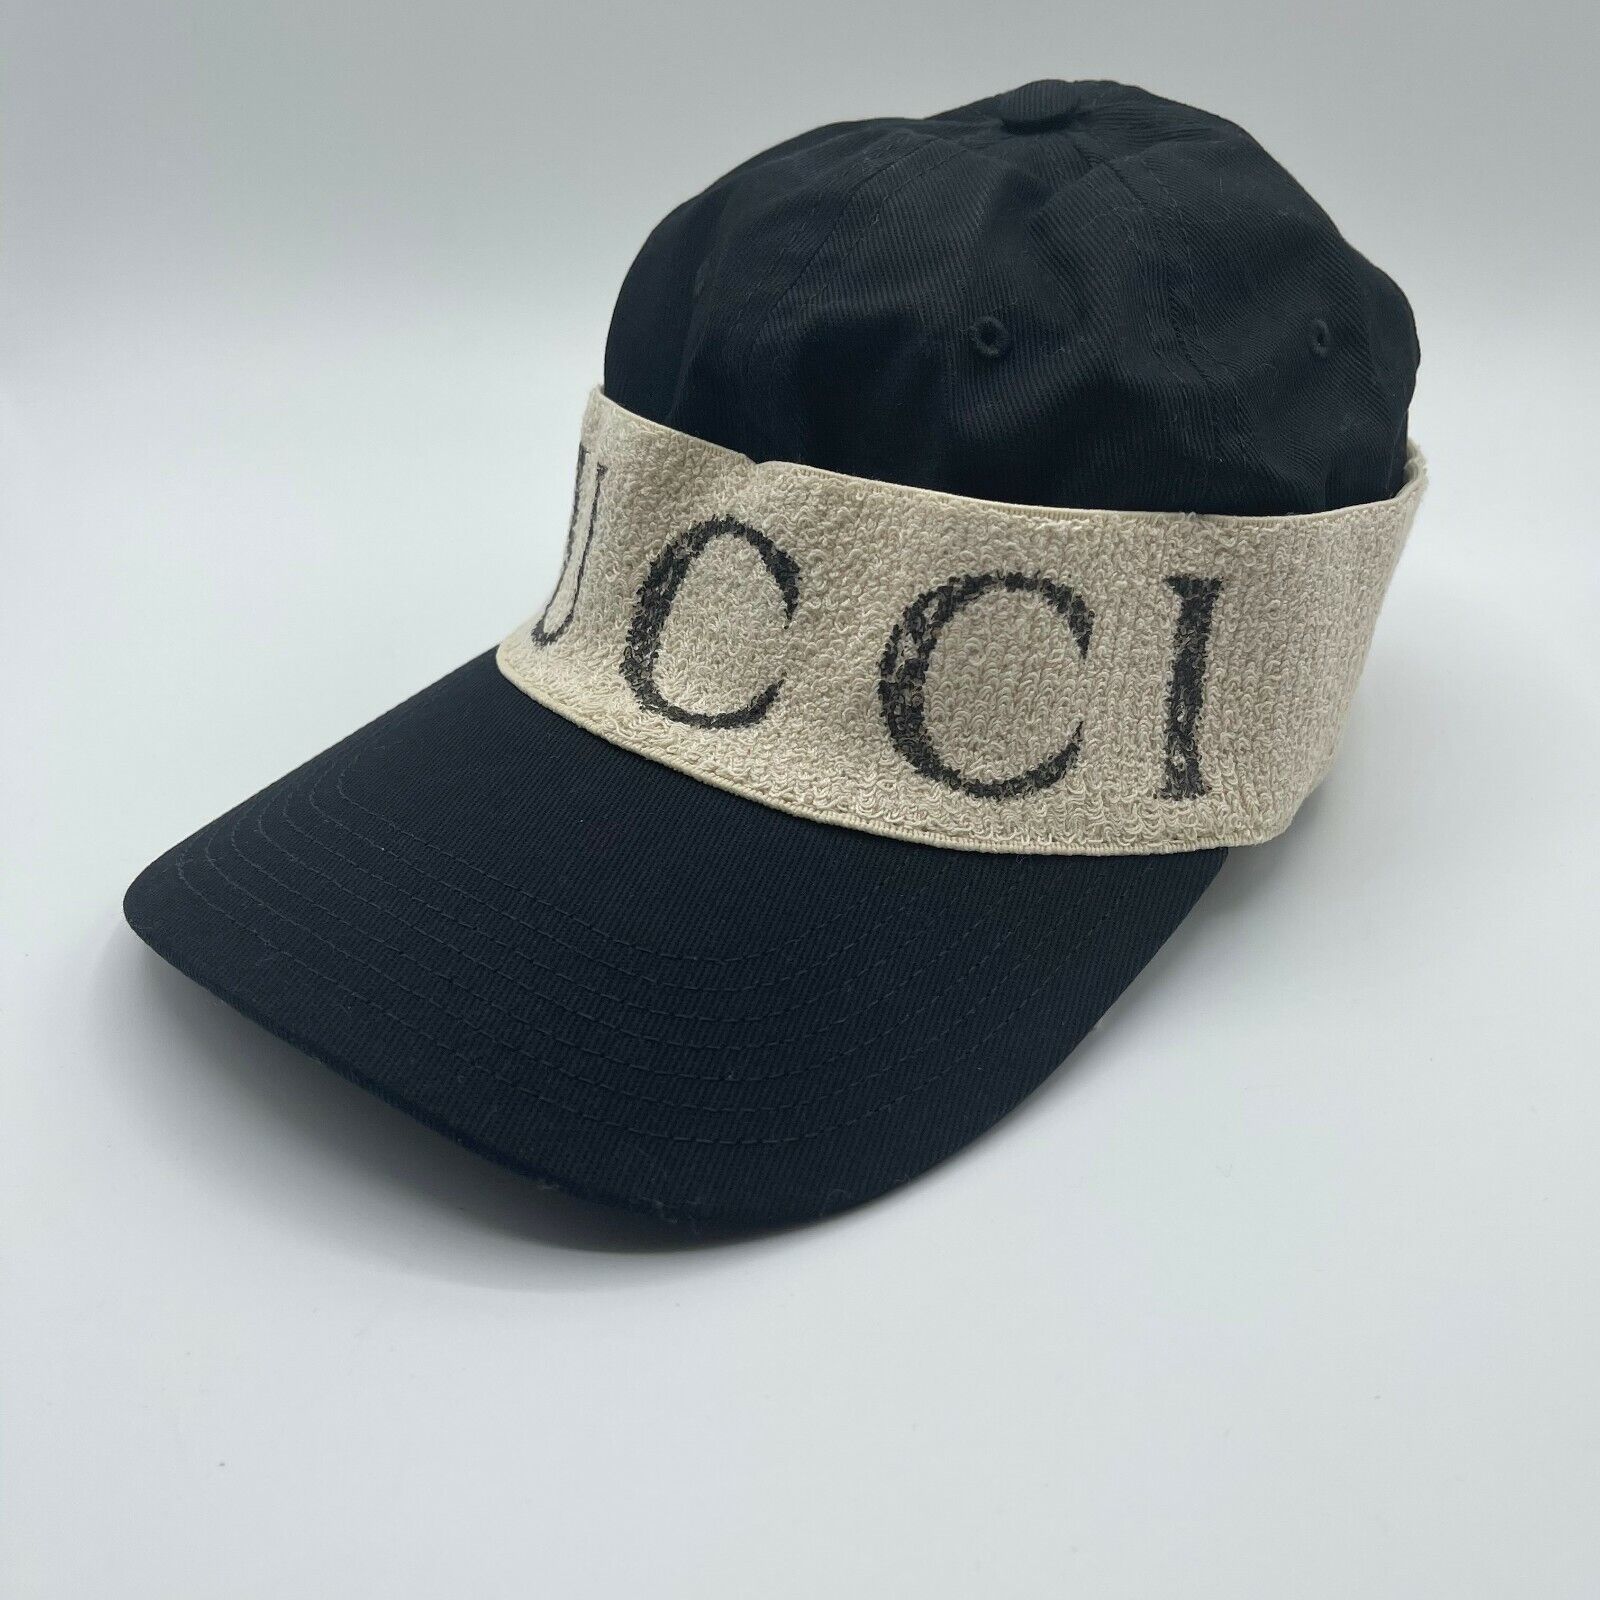 Gucci Unisex Black Canvas White Headband Cabardine Baseball Hat M/58 492545  1077